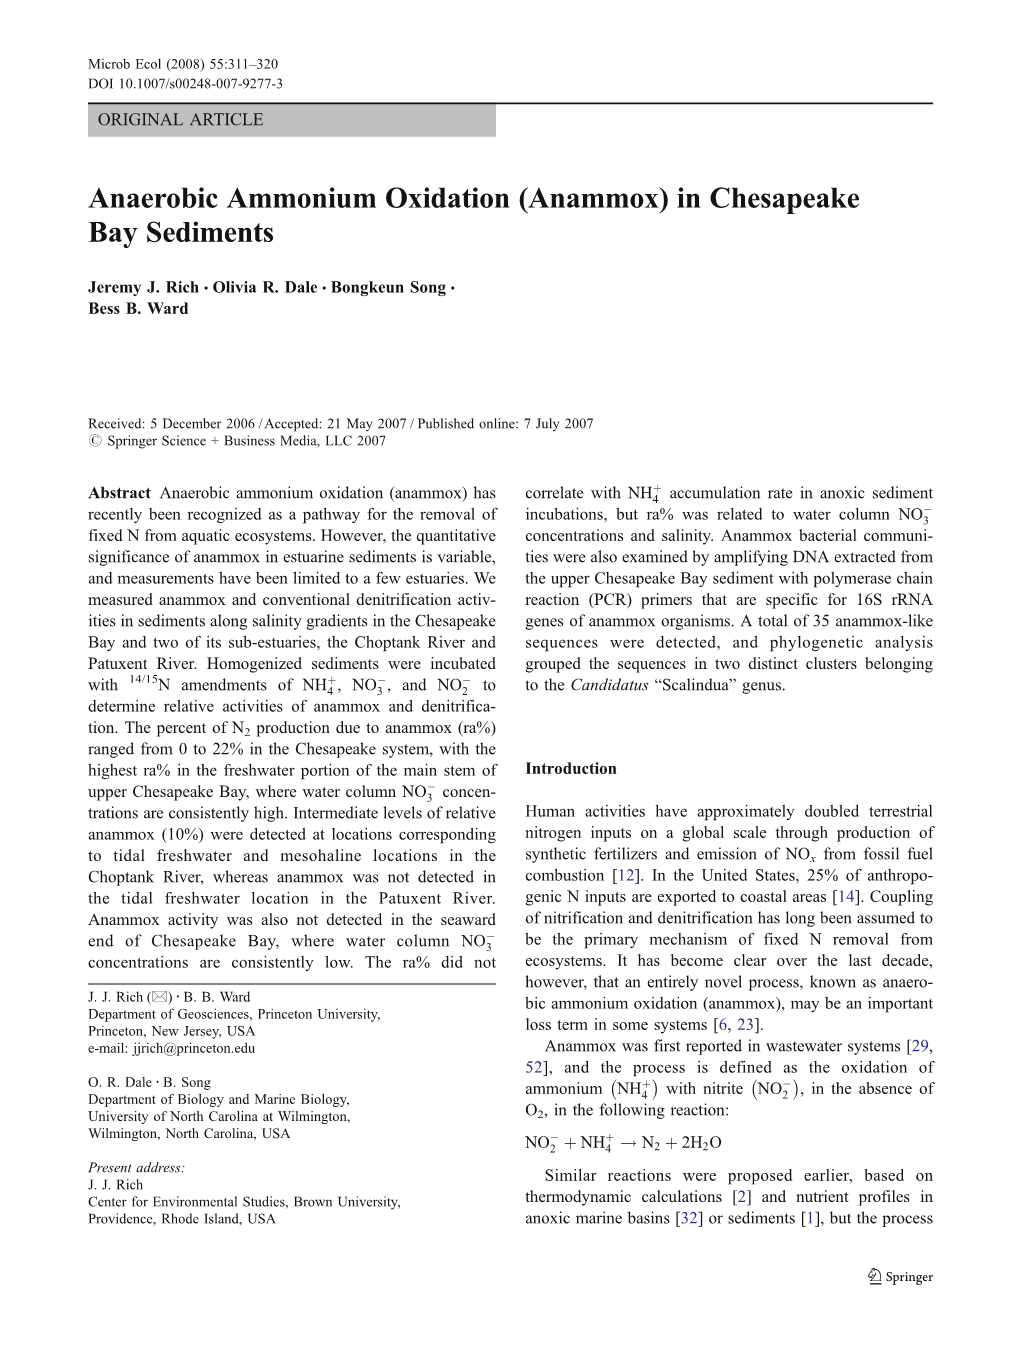 Anaerobic Ammonium Oxidation (Anammox) in Chesapeake Bay Sediments